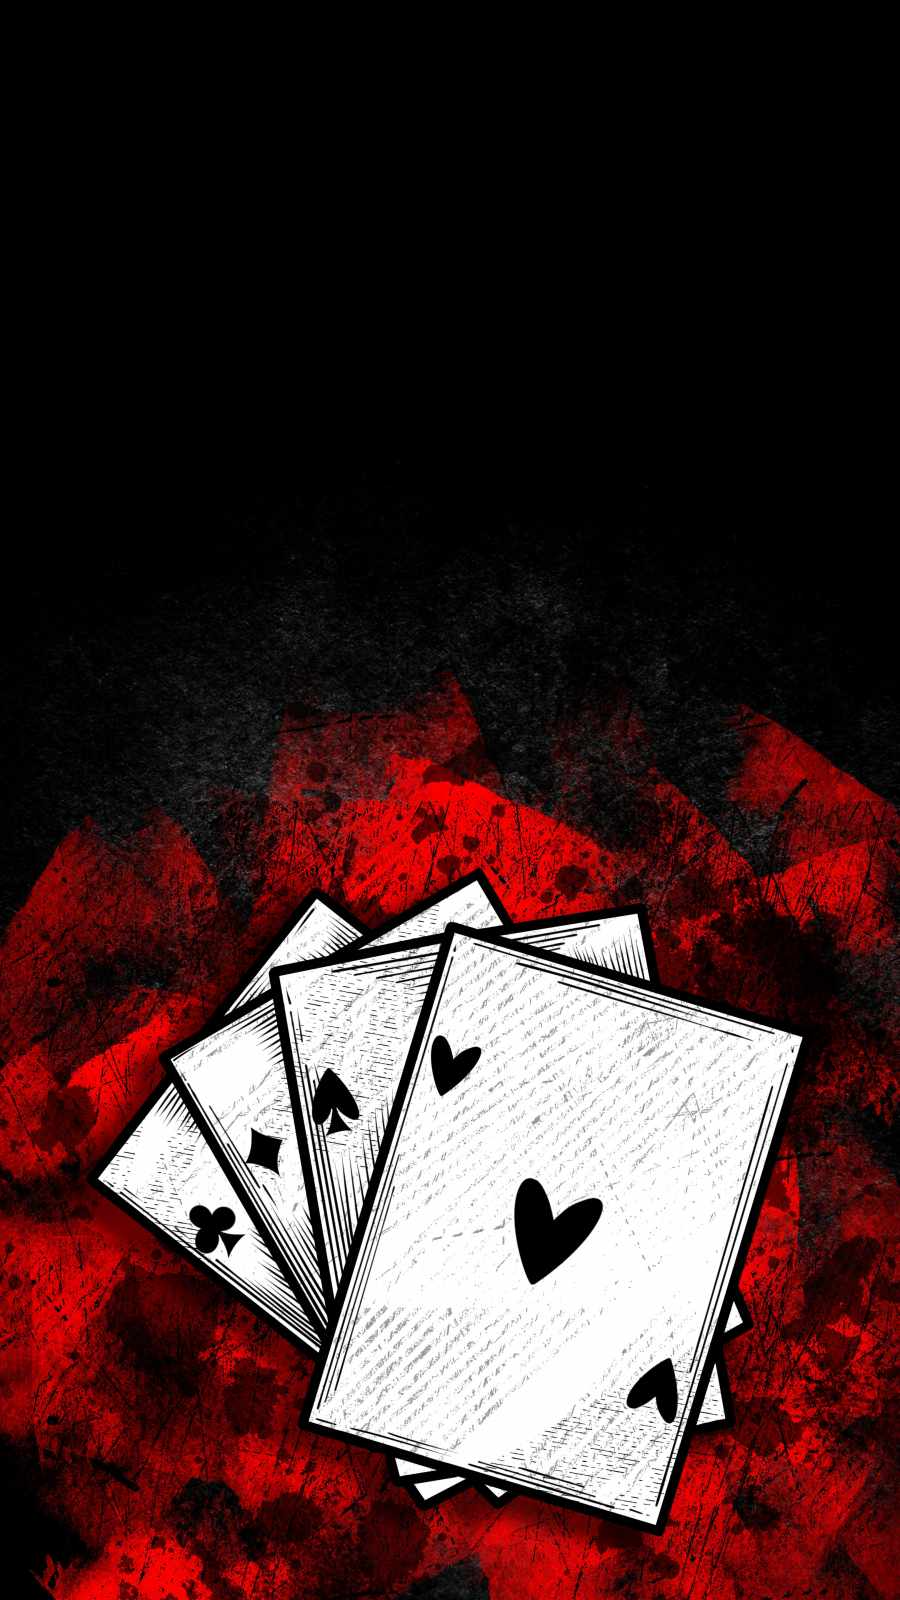 Artistic Poker Cards Wallpaper, iPhone Wallpaper. iPhone wallpaper image, Space iphone wallpaper, iPhone wallpaper